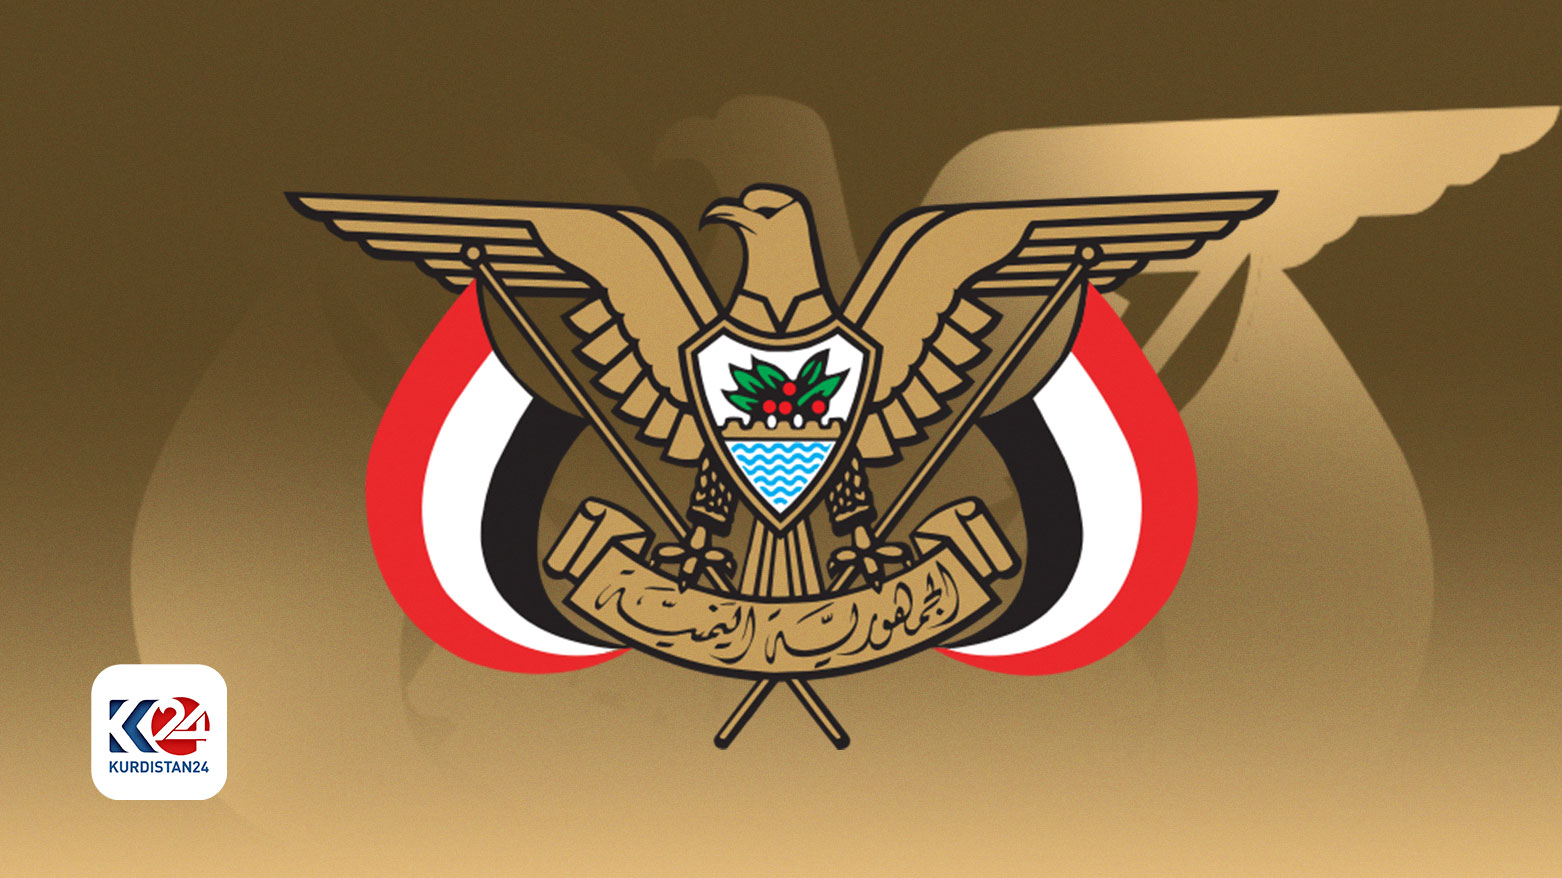 The logo of the Yemeni government. (Photo: Designed by Kurdistan24)